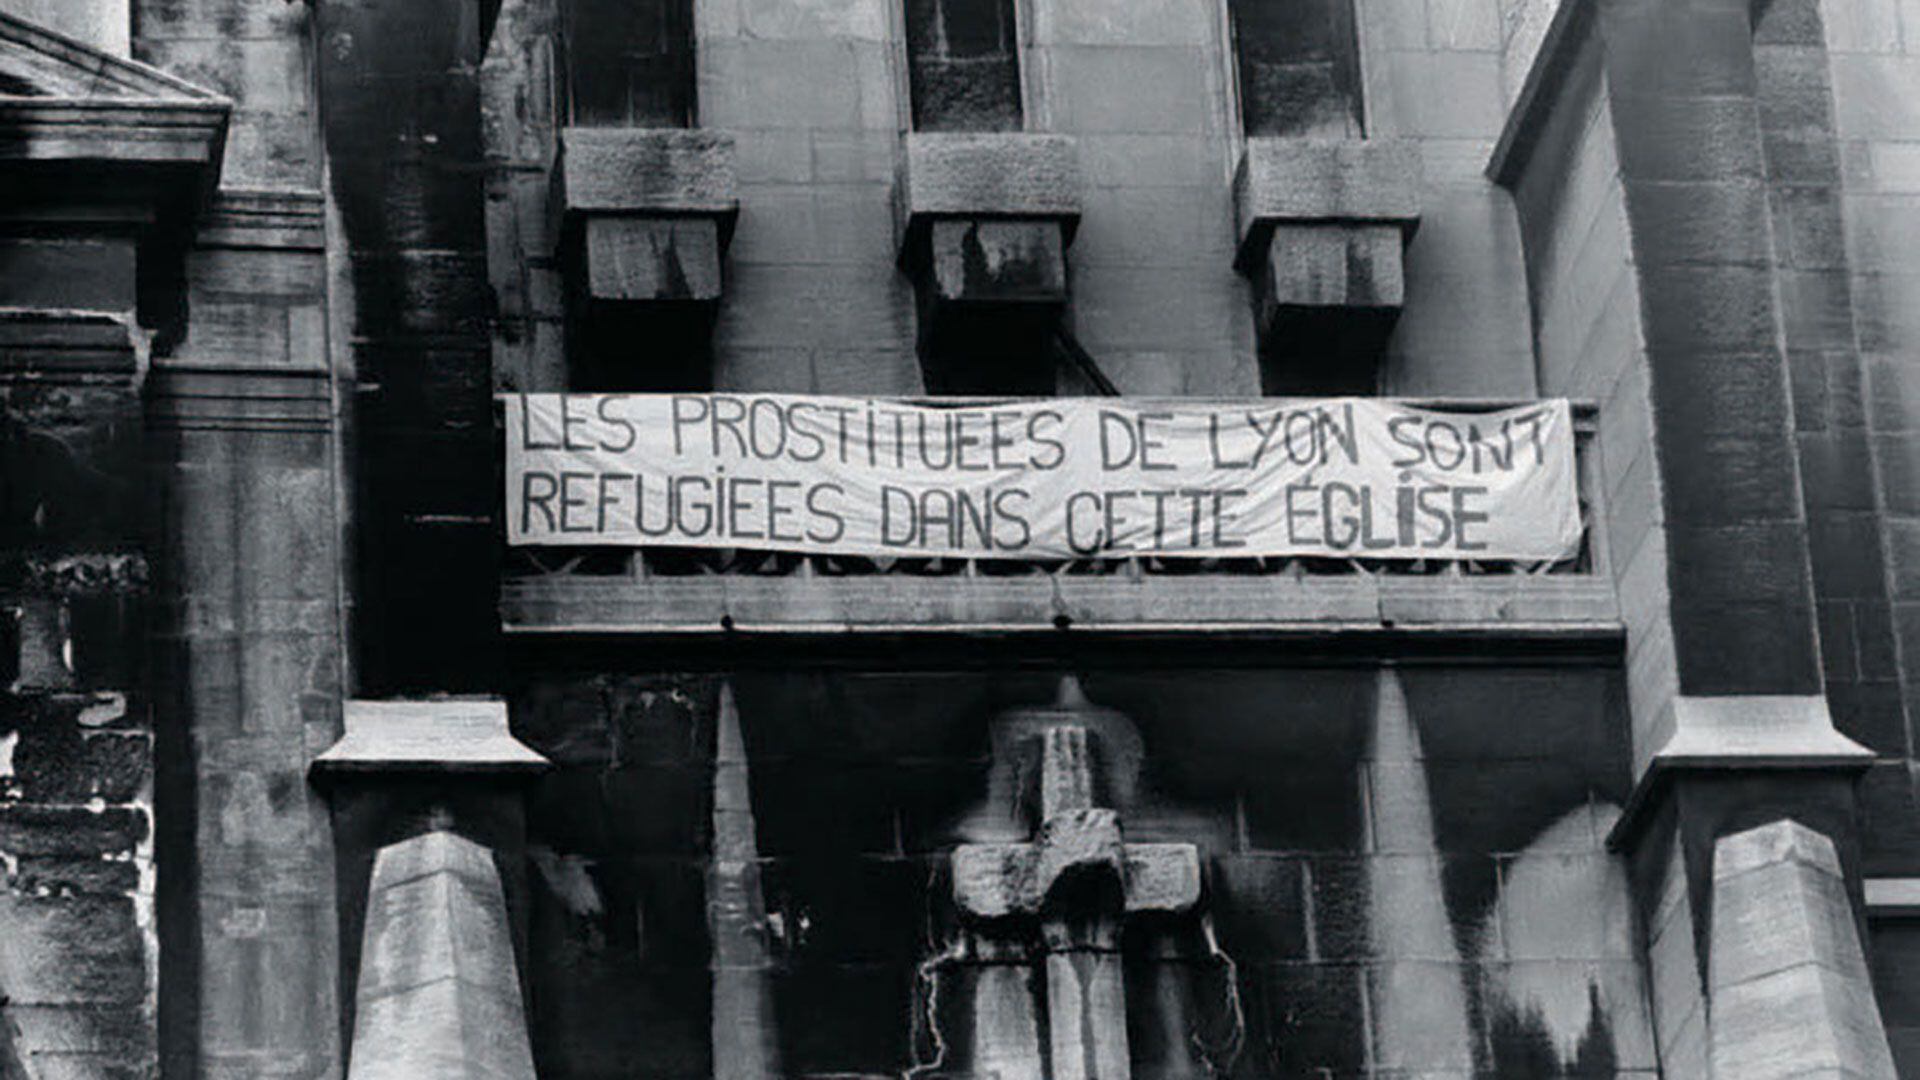 "Les prostituees de Lyon sont refugiees dans cette eglise", dice la bandera colgada en la puerta de la parroquia. Significa: "Las prostitutas de Lyon se refugian en este iglesia"

